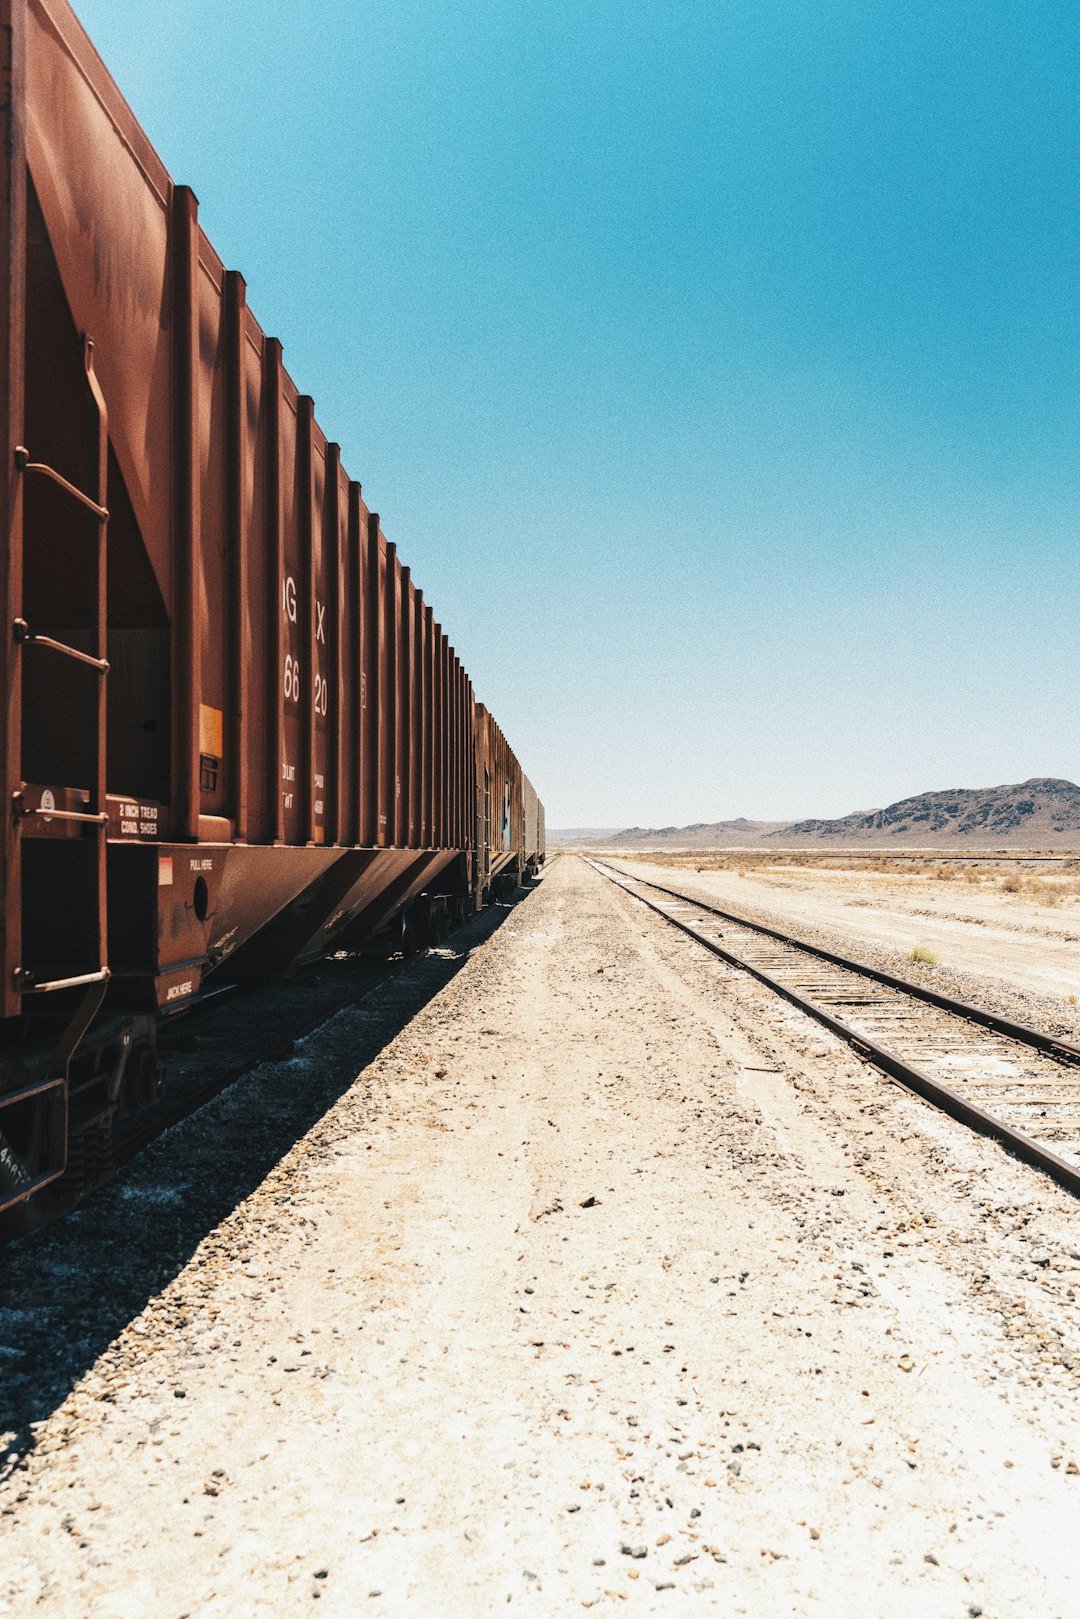 brown train on rail during daytime